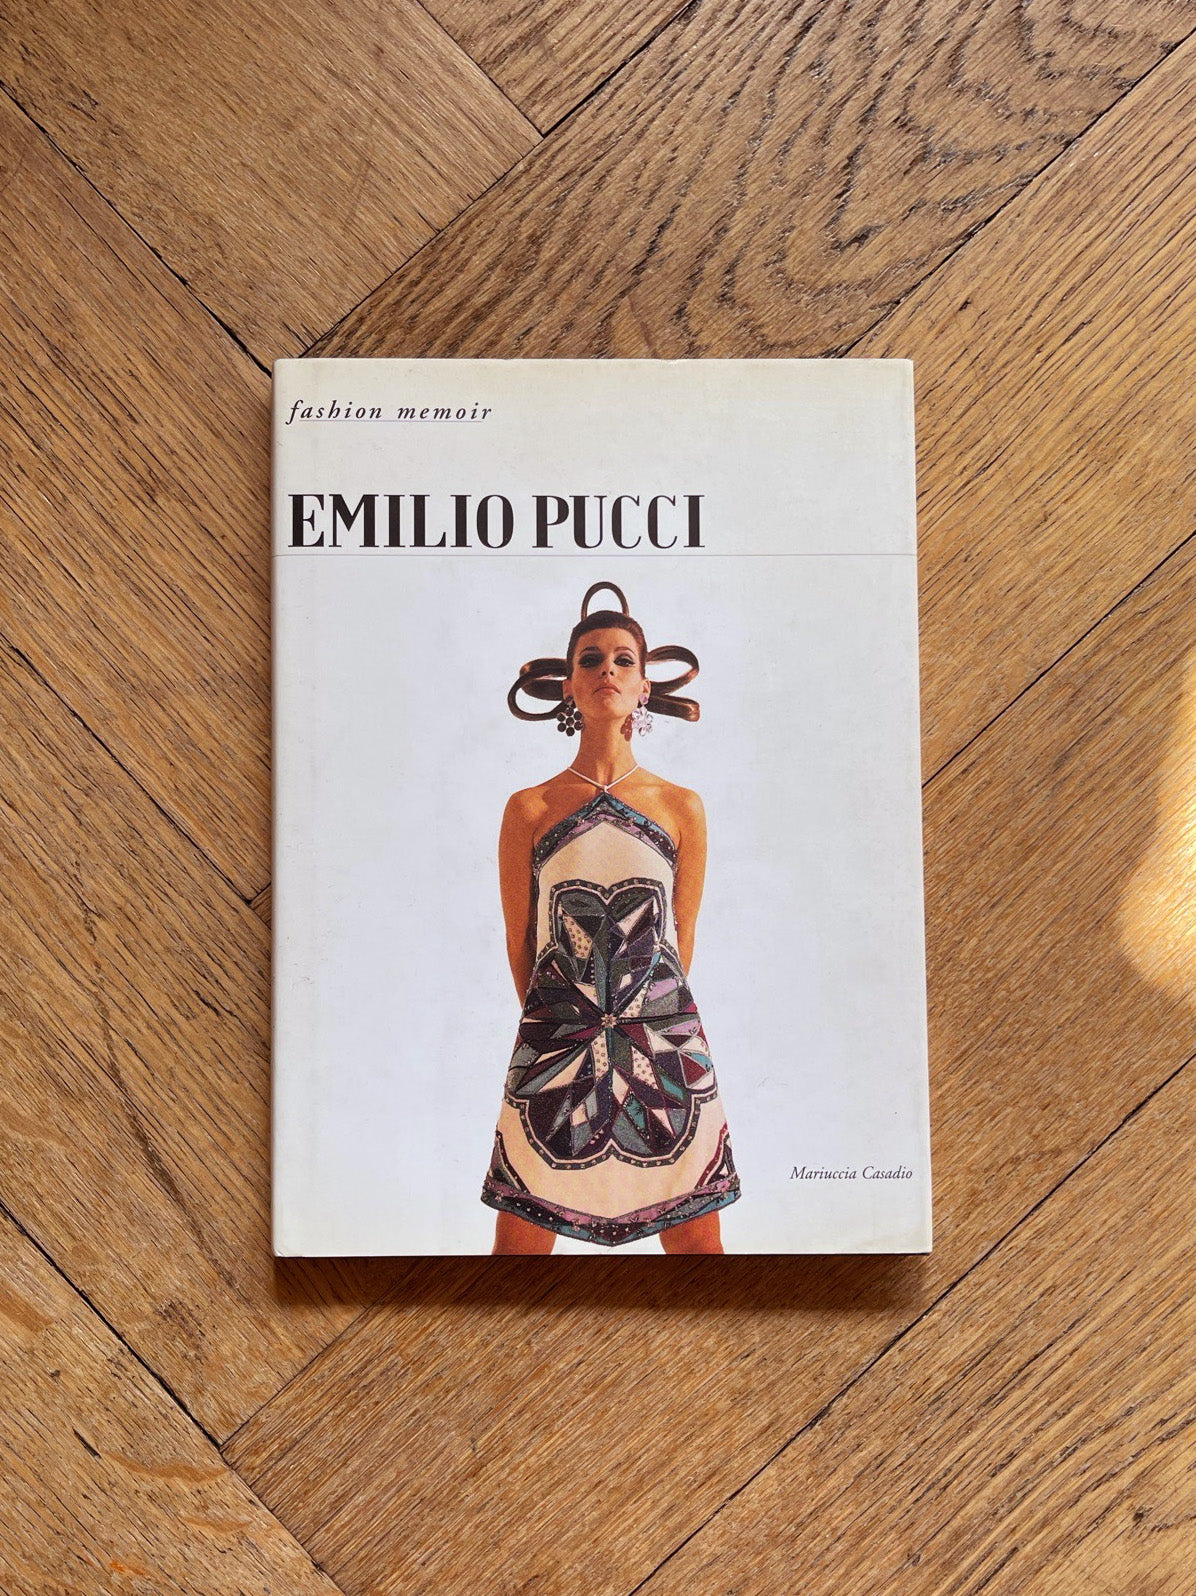 Emilio Pucci Fashion Memoir by Mariuccia Casadio